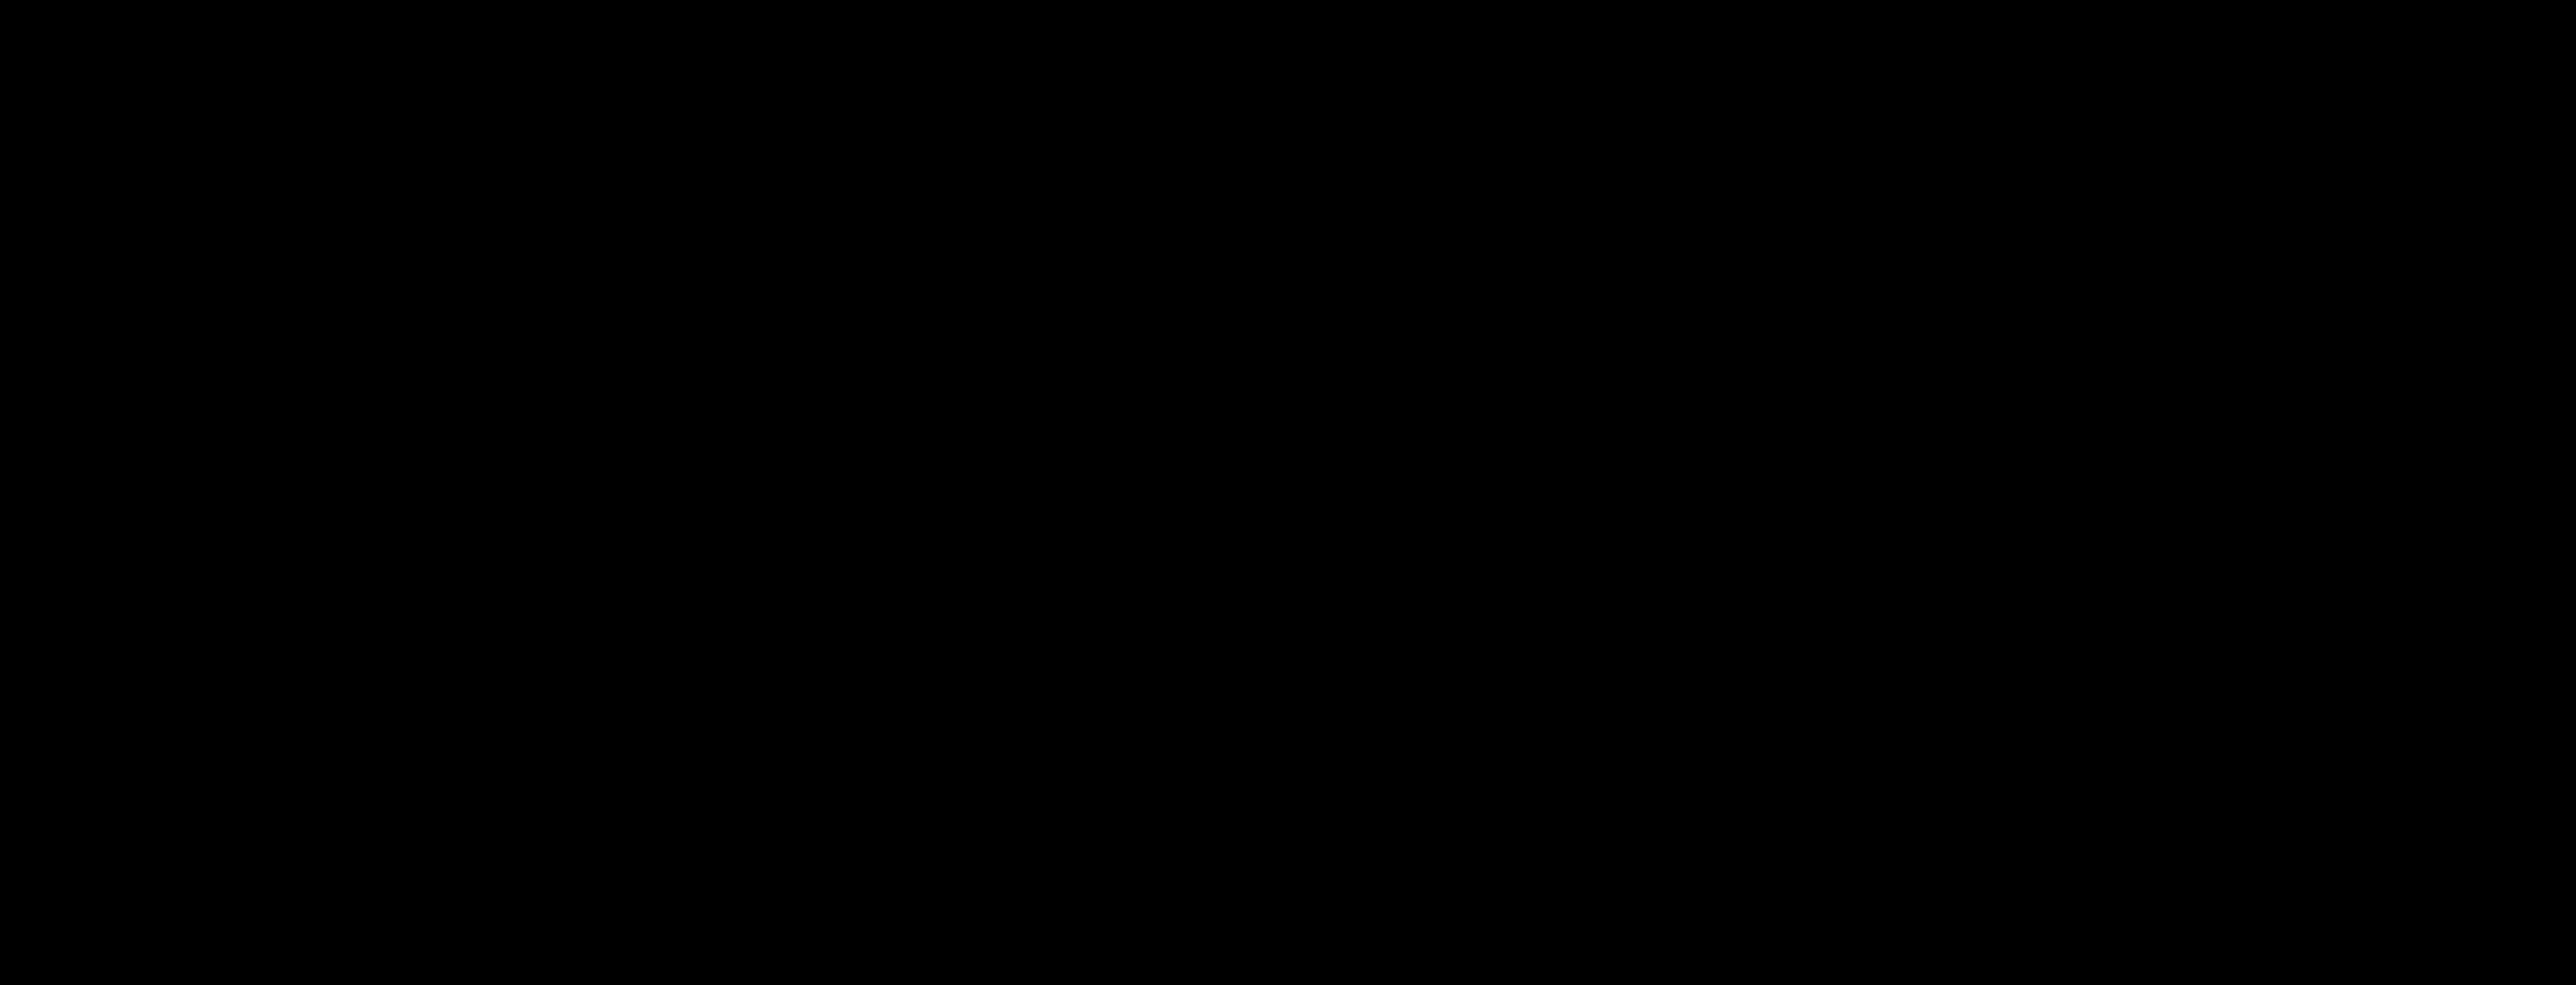 Pubg Logo Black Background